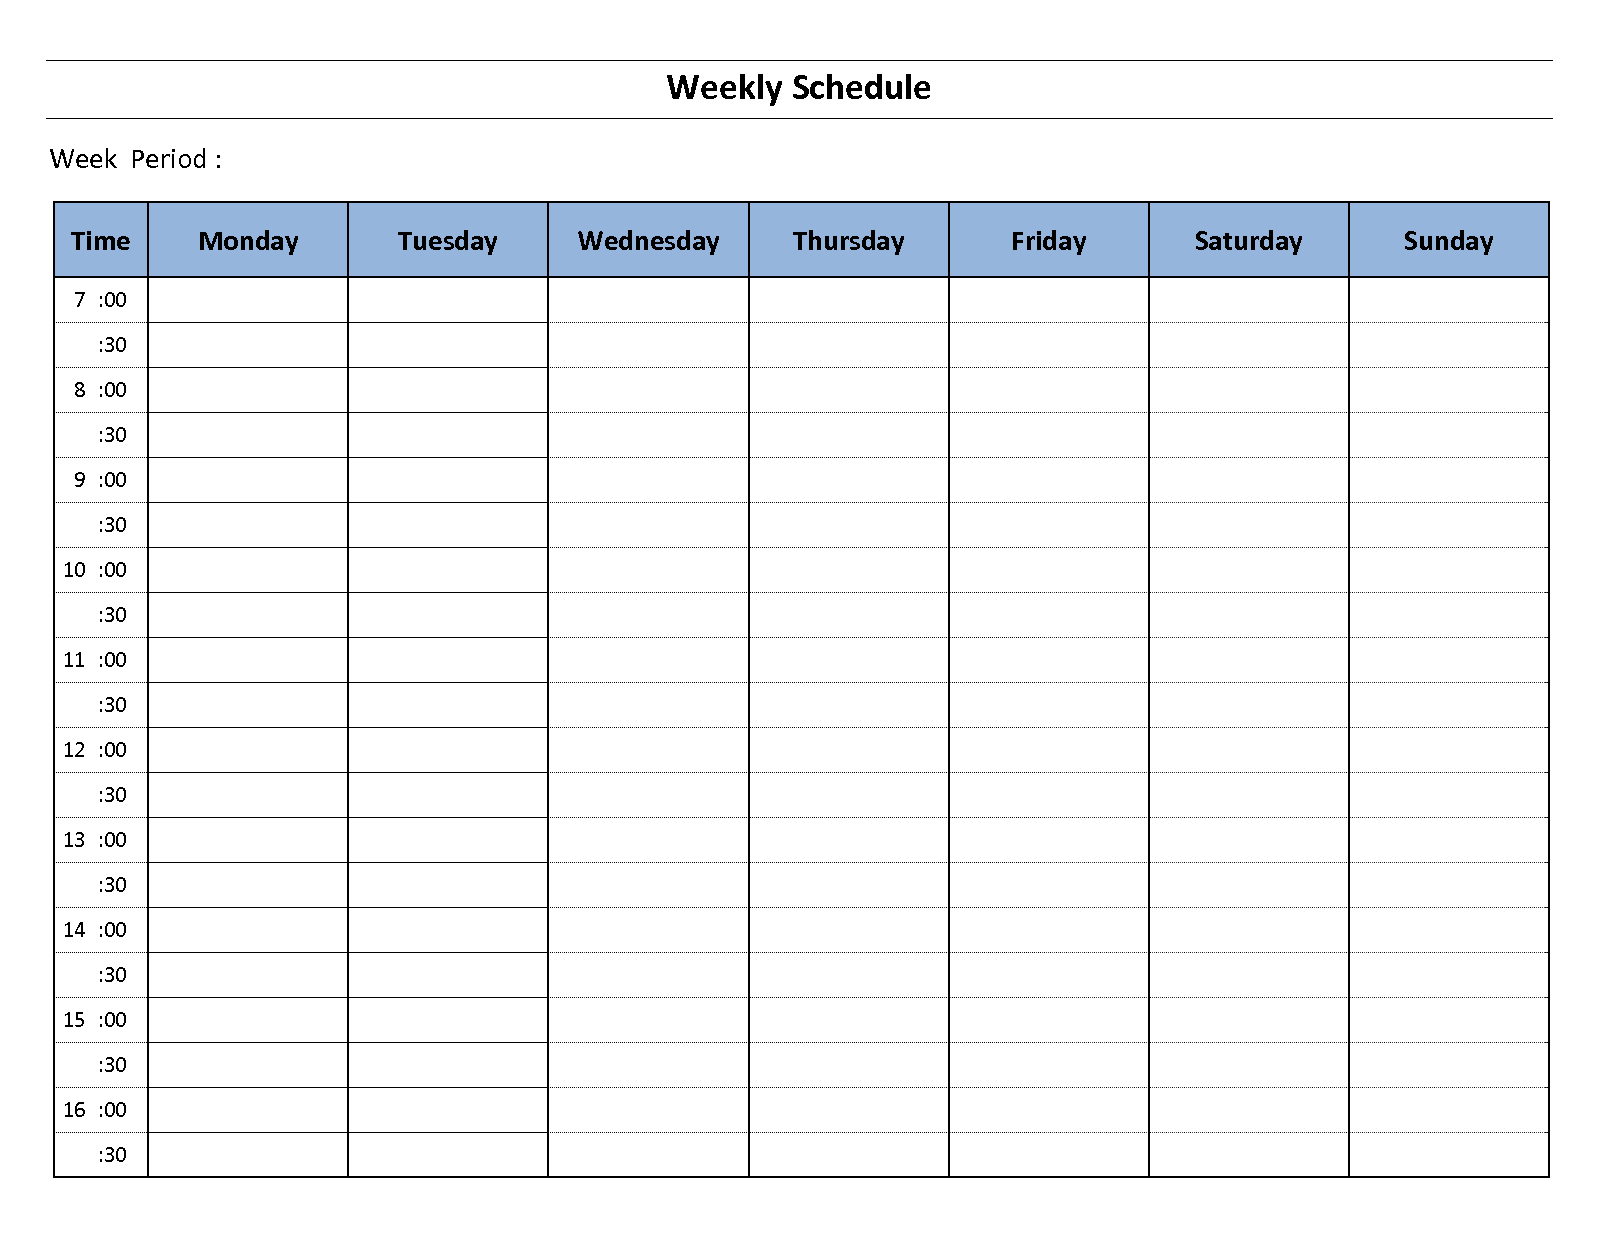 weekly work schedule template pdf